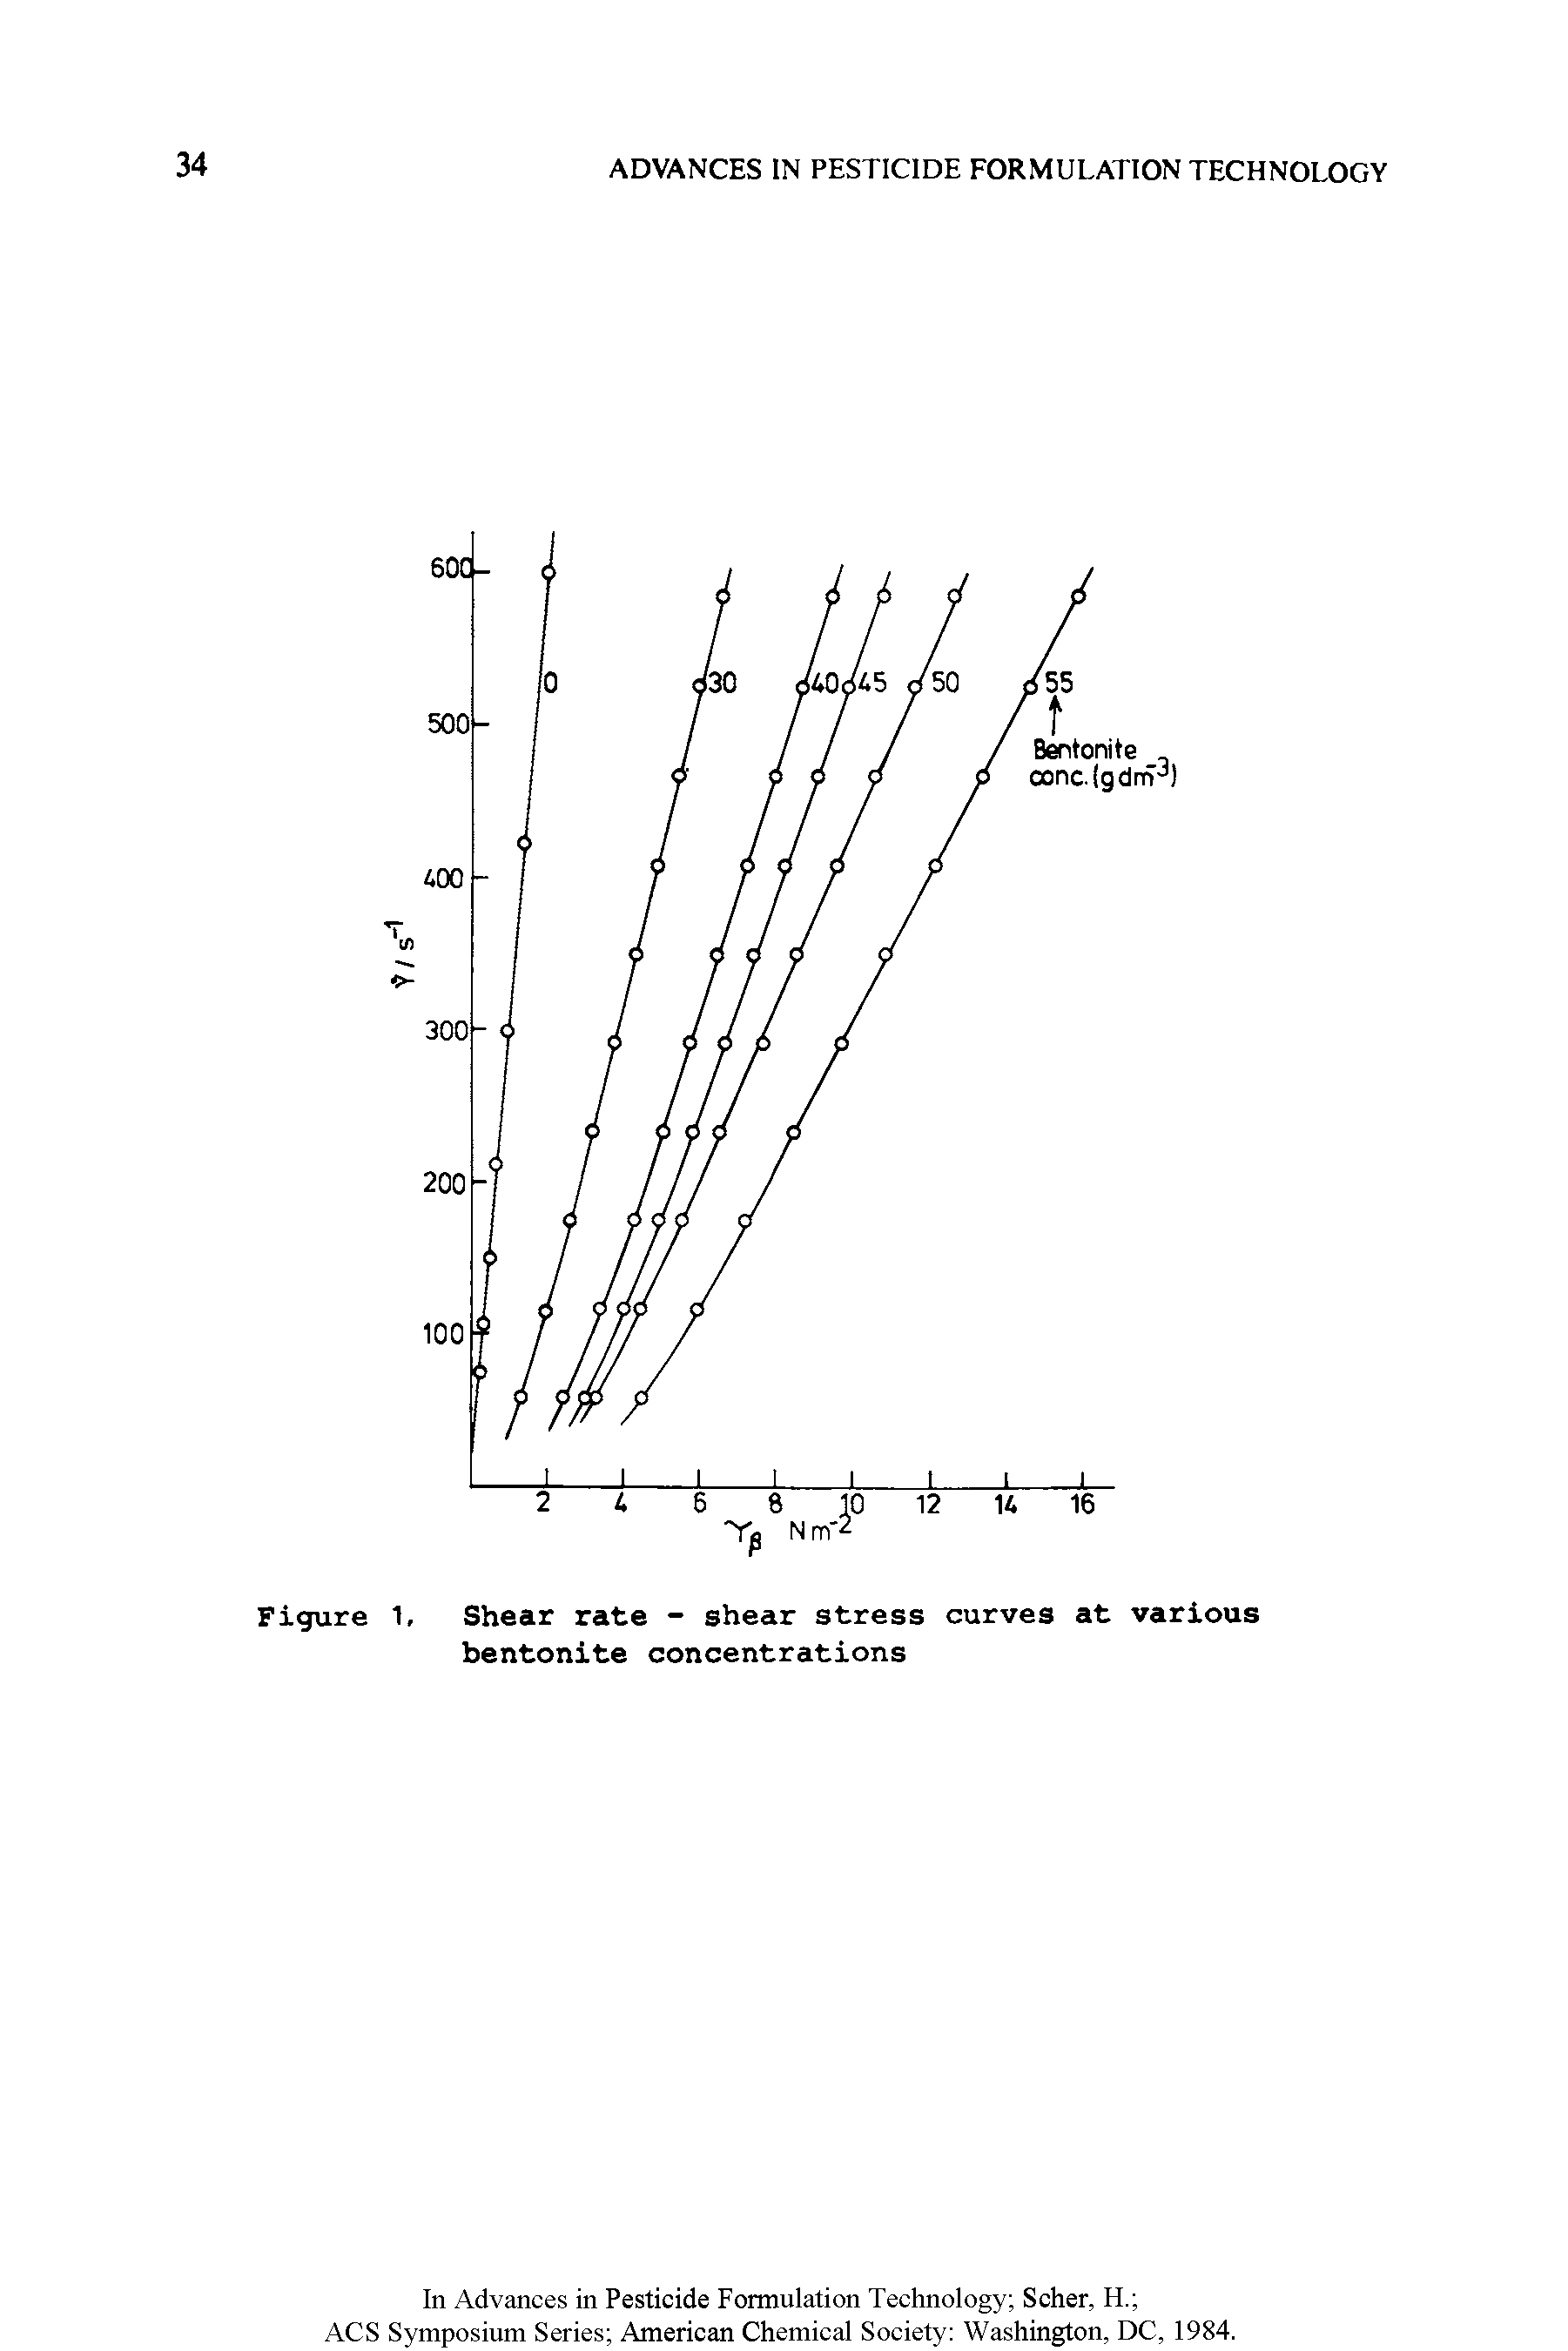 Figure 1, Shear rate - shear stress curves at various bentonite concentrations...